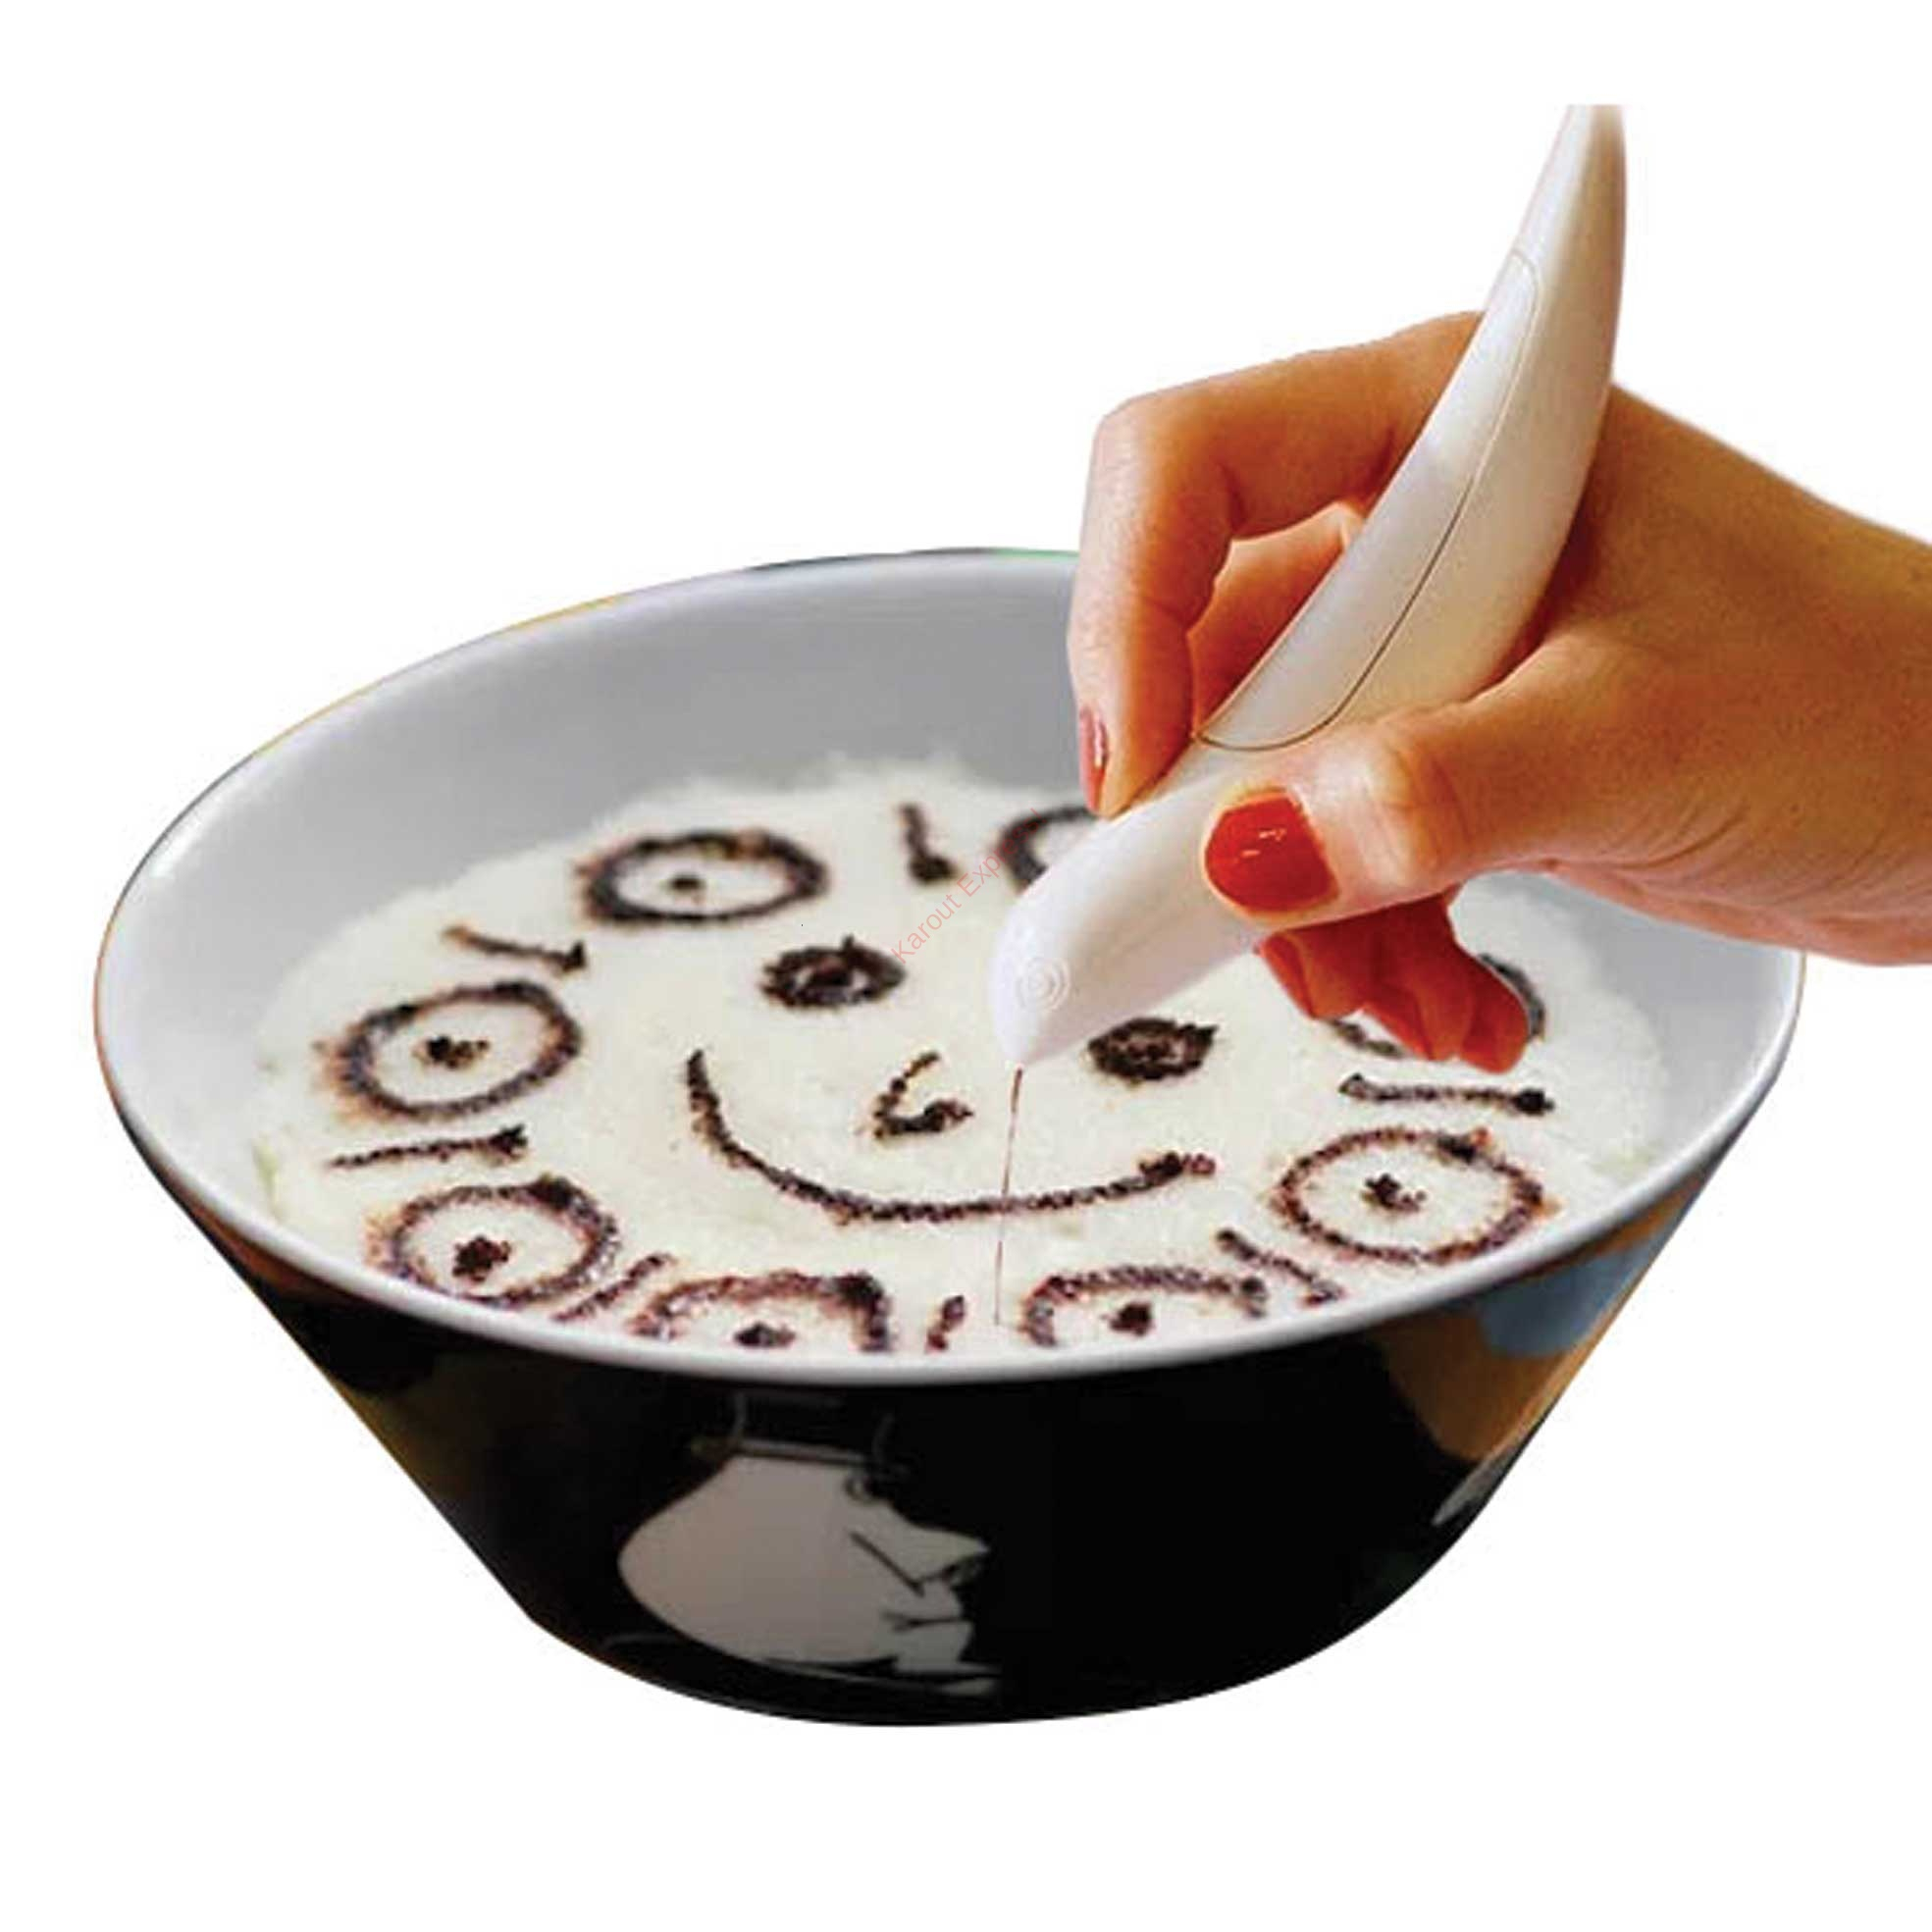 Electrical Latte Art Pen for Coffee Cake Spice Pen Cake Decoration